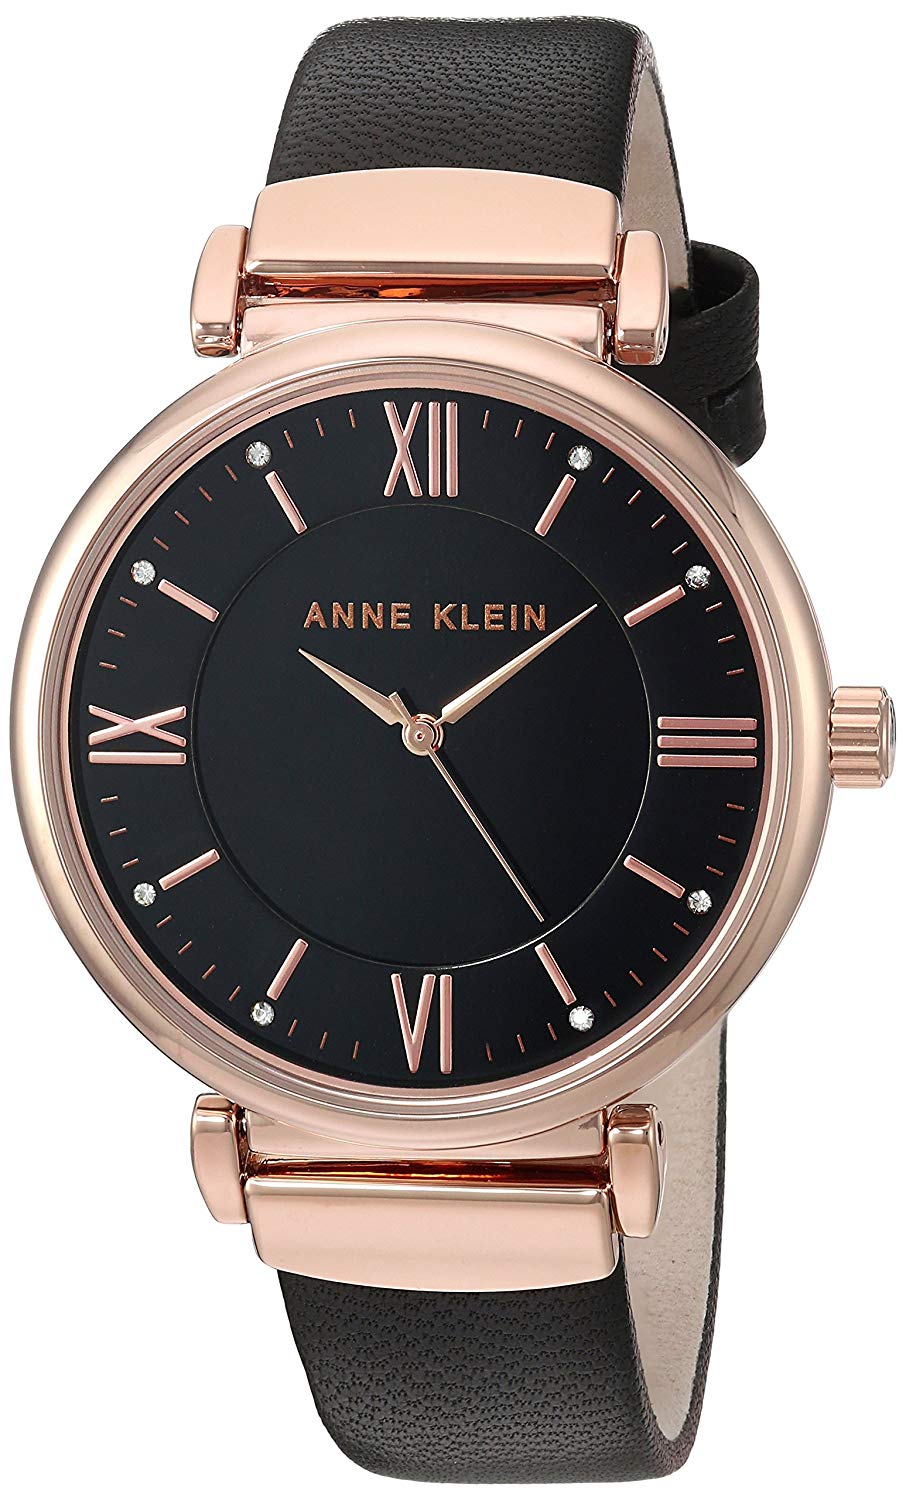 Anne Klein Leather Ladies Watch AK-2666RGBK 86702591770 | eBay